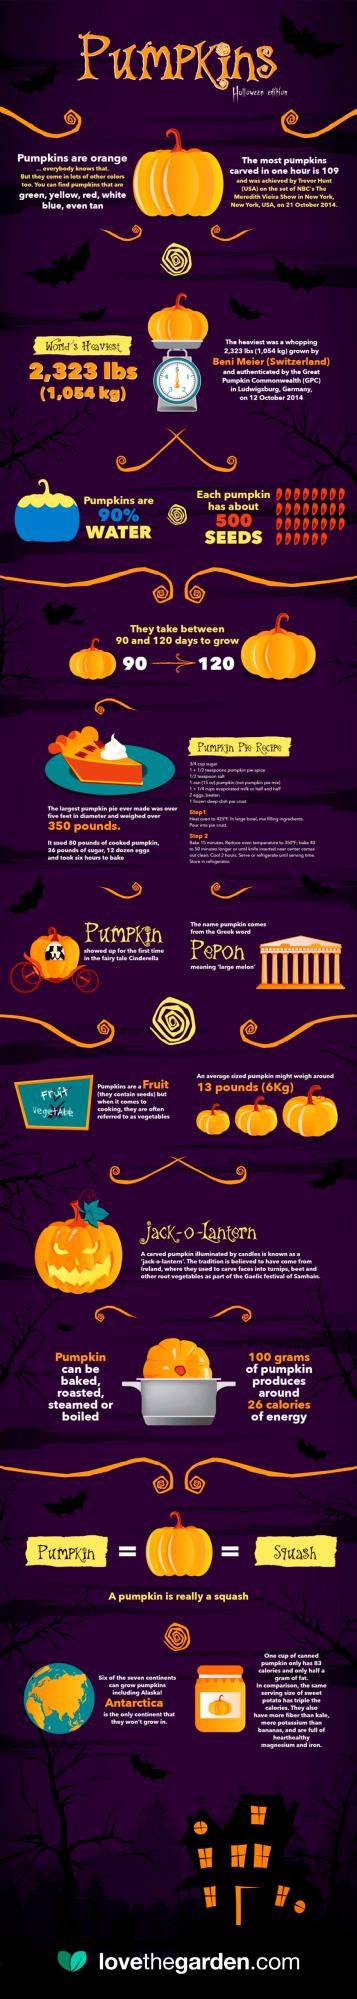 Pumpkins infographic